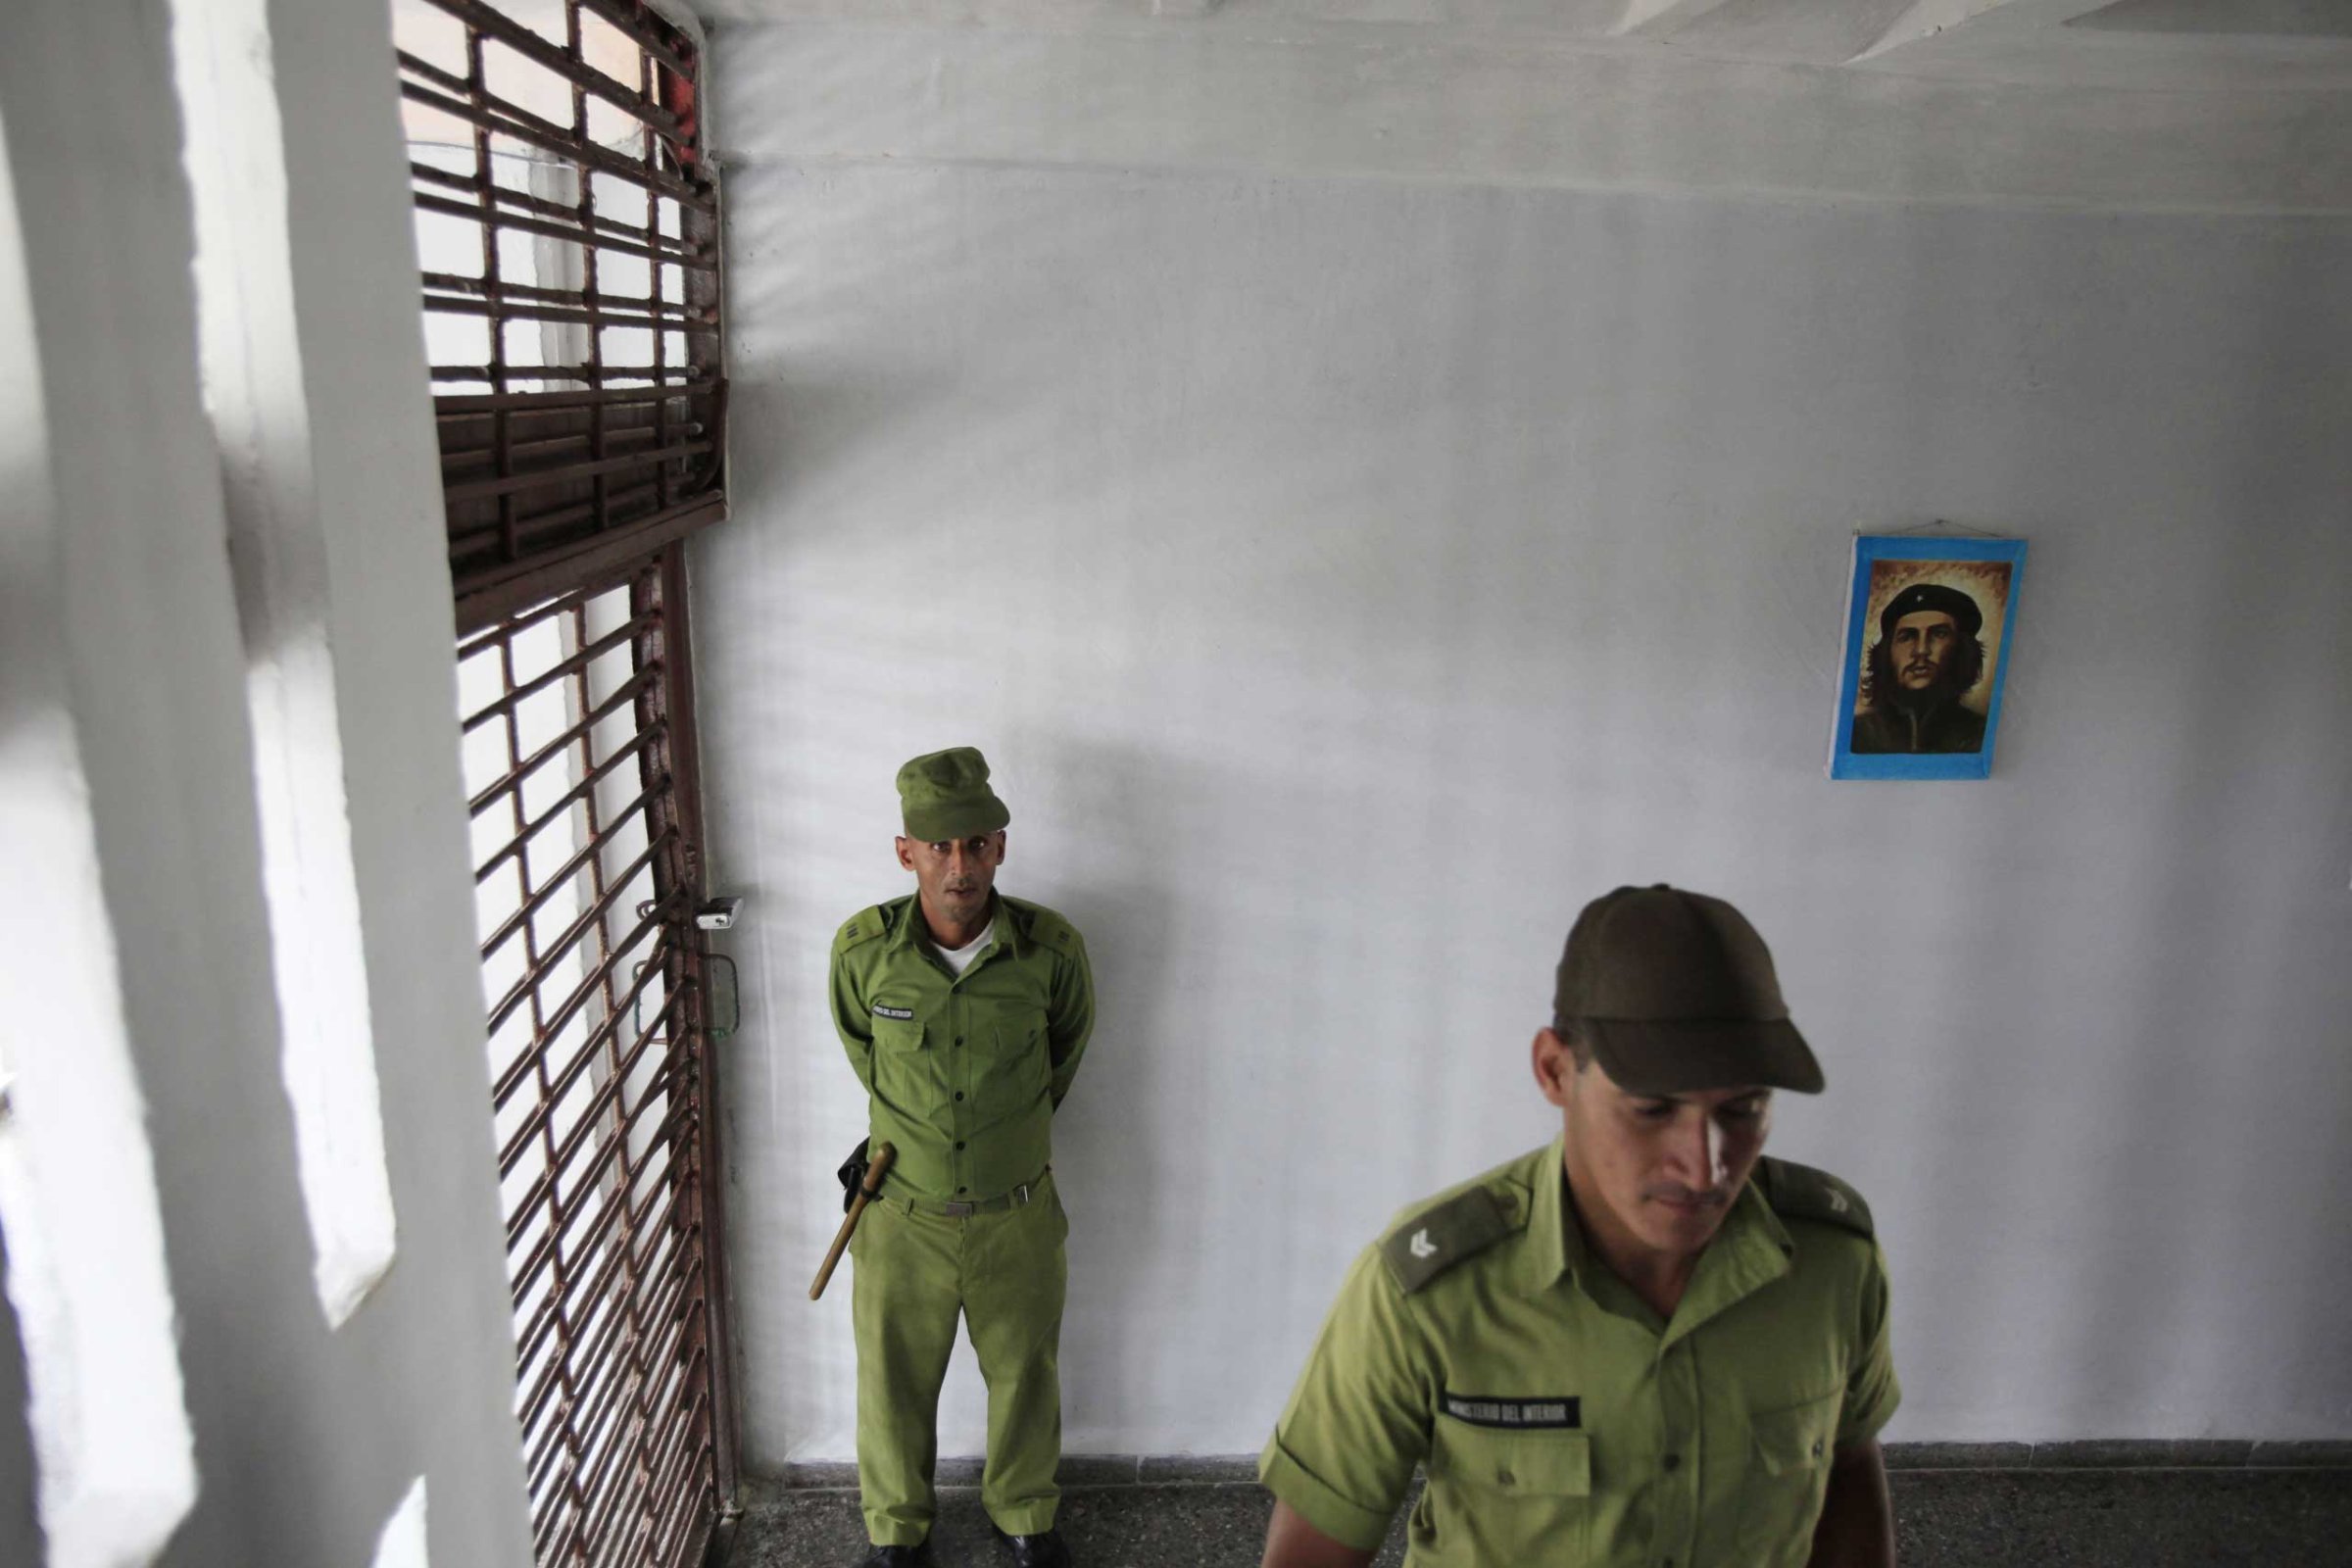 Military guards at the Combinado del Este prison in Havana, Cuba in 2013.